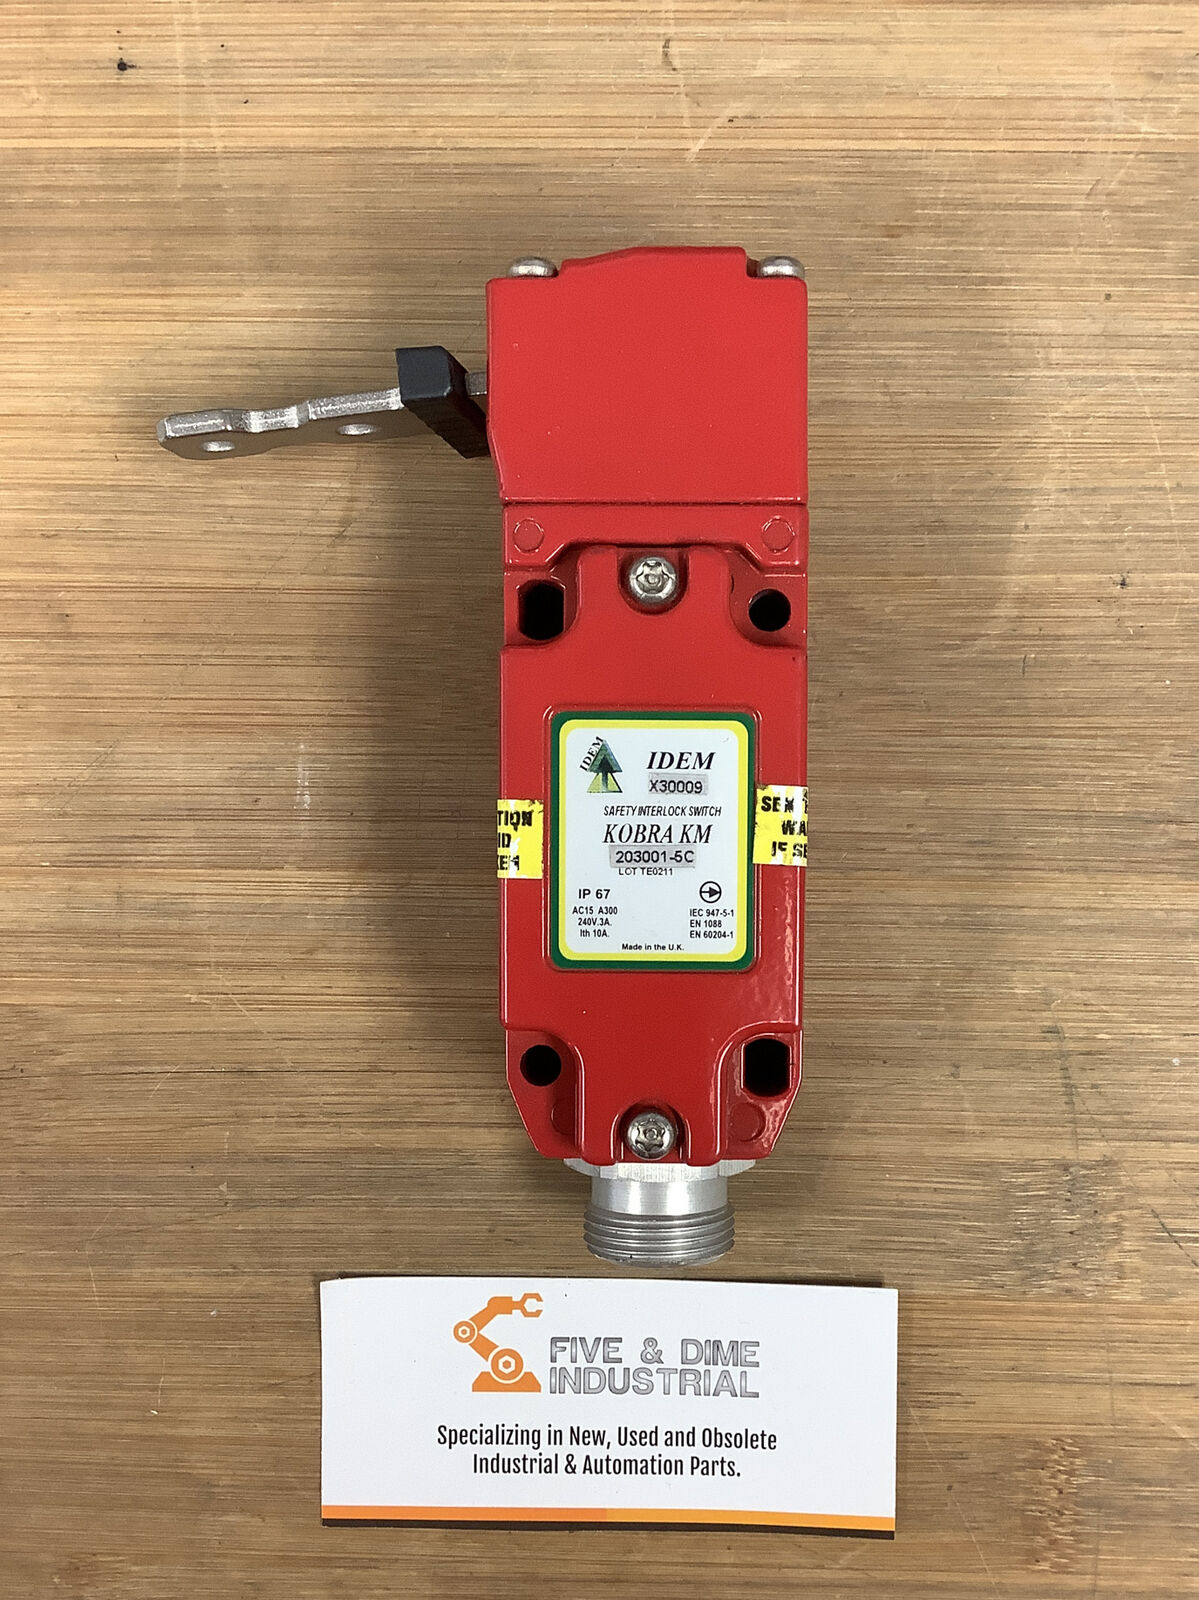 IDEM IEC X30009 / 203001-5C  Safety Switch (BL137)